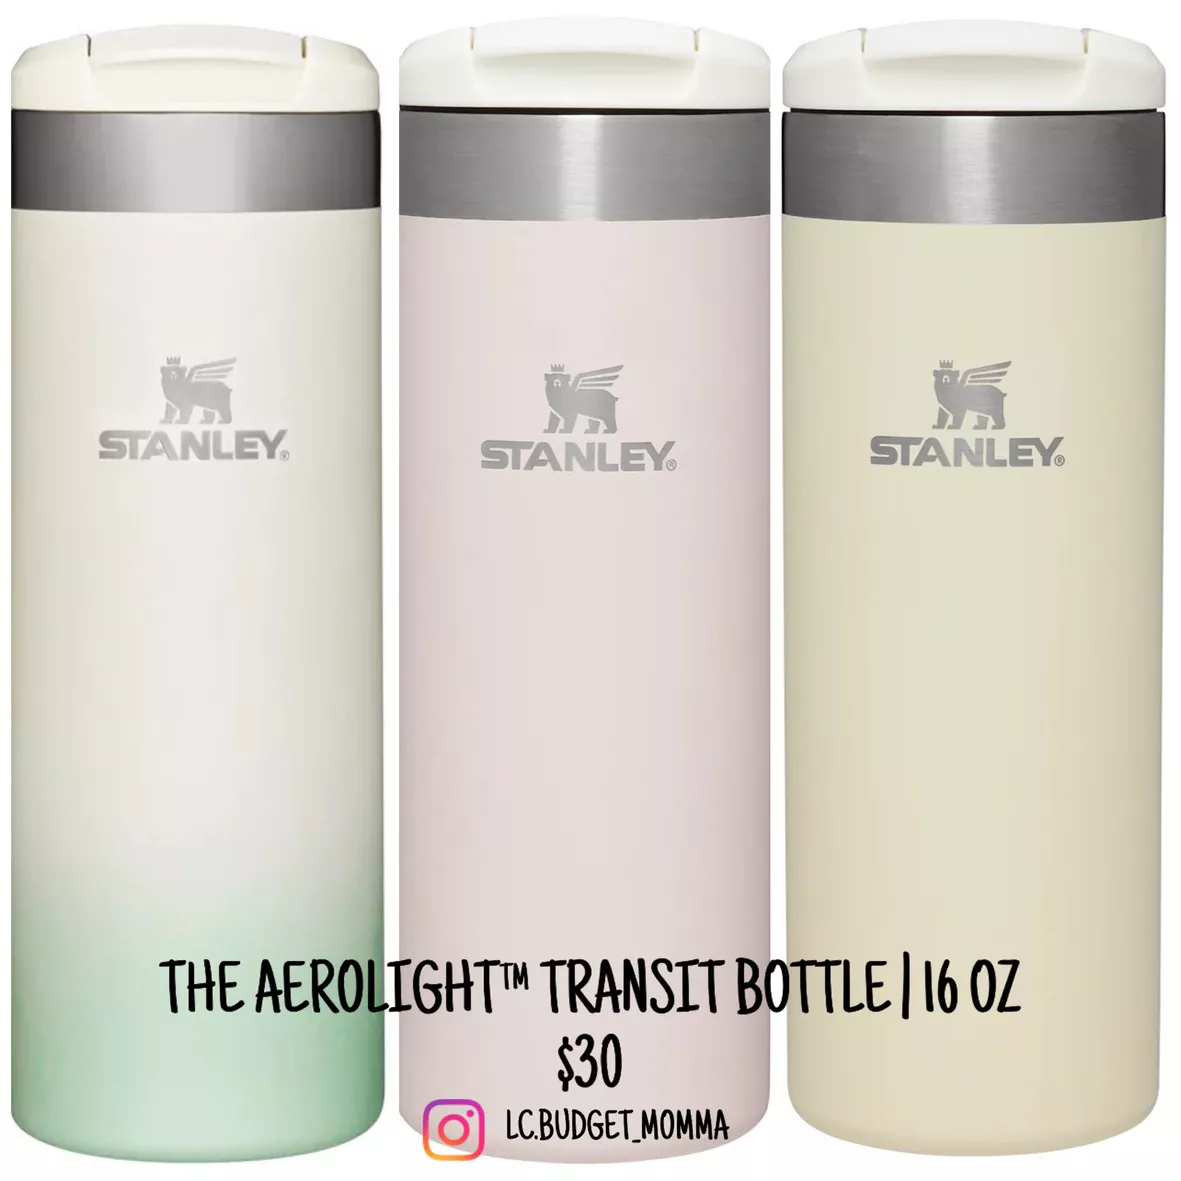 The AeroLight™ Transit Bottle curated on LTK